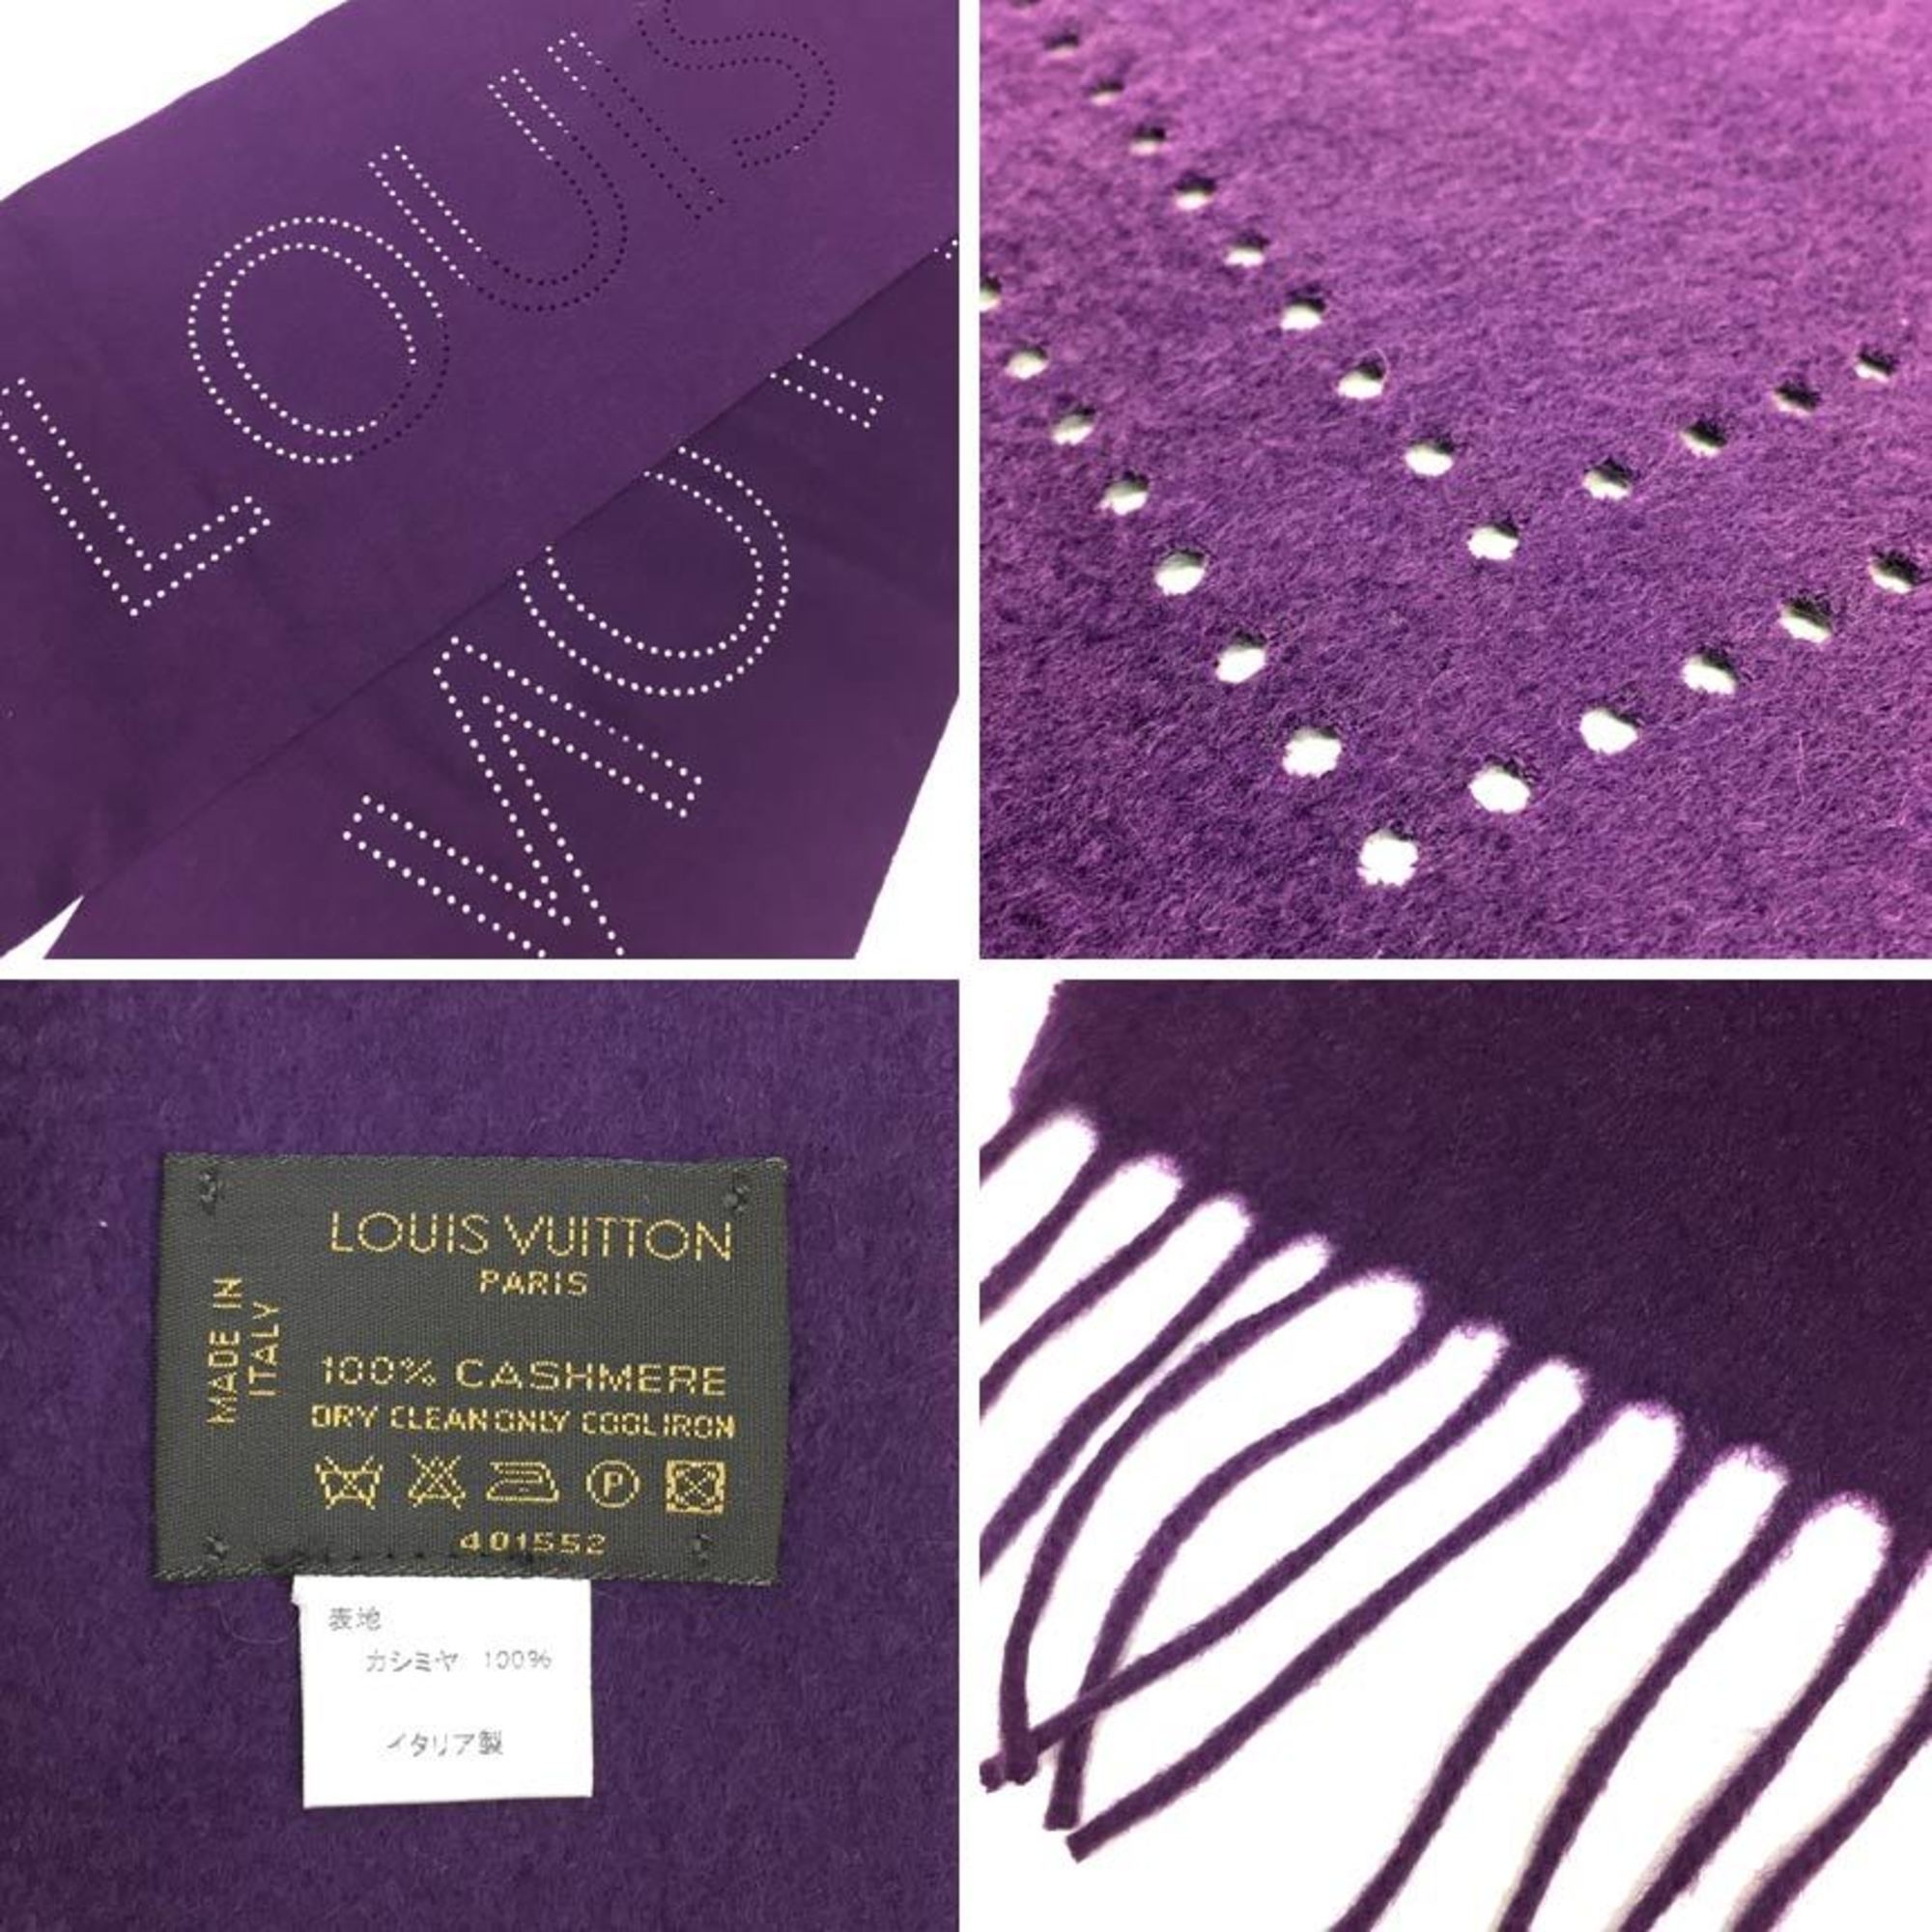 LOUIS VUITTON Louis Vuitton Escharpe LV Perfot Punching Muffler 401552 Dark Purple Cashmere Shawl aq9427